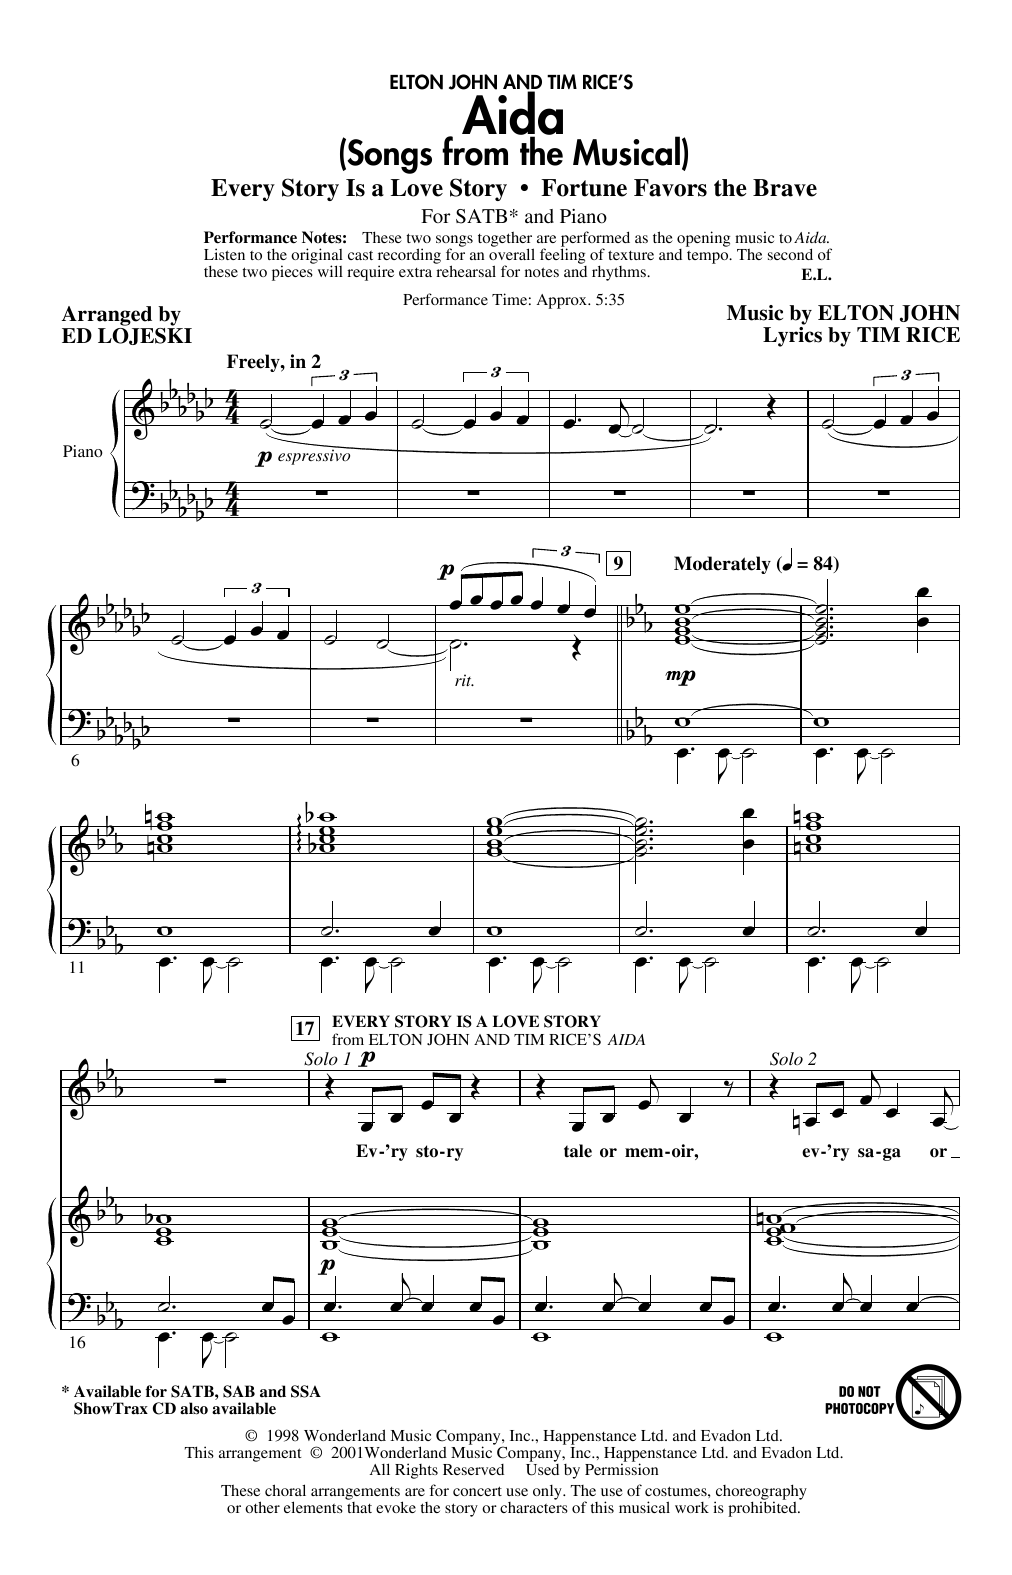 Elton John & Tim Rice Aida (Songs from the Musical) (arr. Ed Lojeski) Sheet Music Notes & Chords for SAB Choir - Download or Print PDF